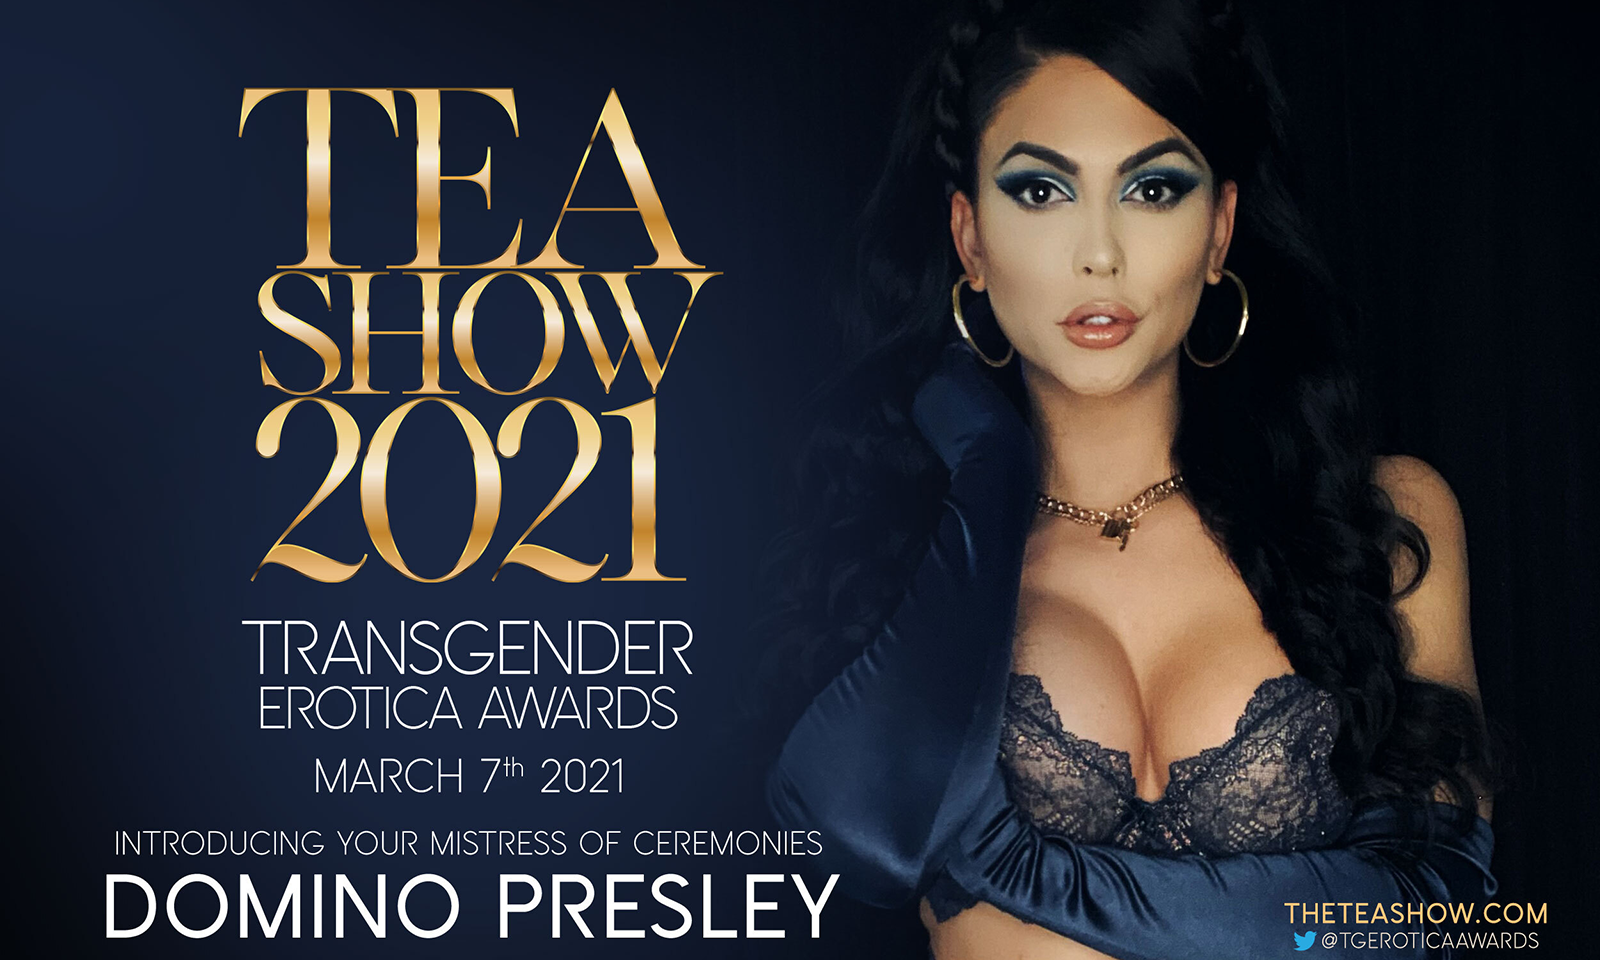 TEA Show Again Chooses Domino Presley as Mistress of Ceremonies